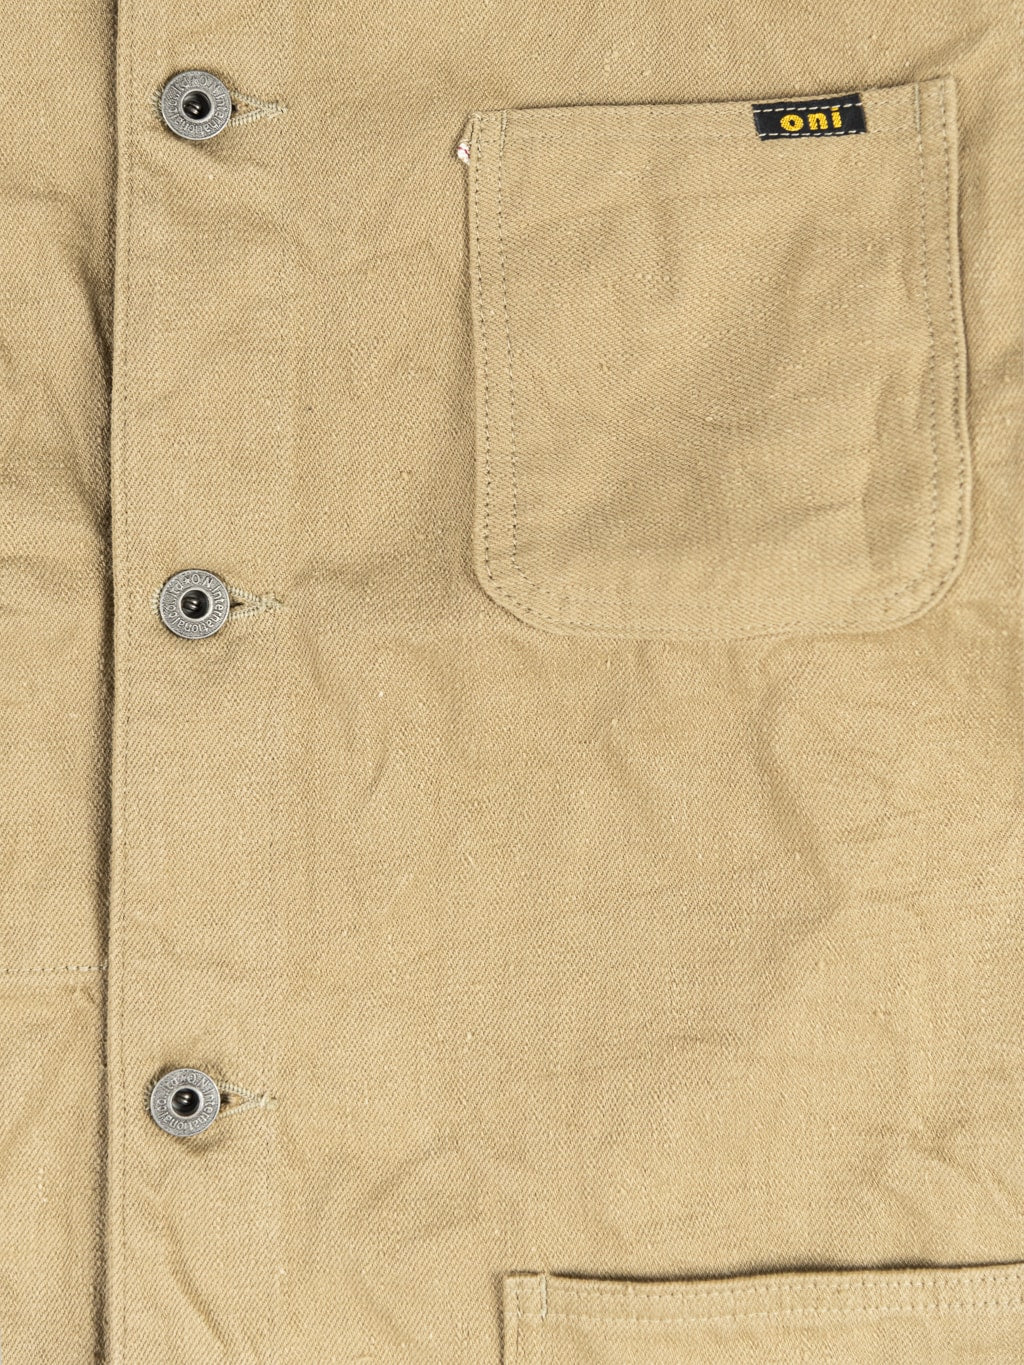 ONI Denim 03501 Sulfur Coverall Jacket Khaki Beige front pocket details